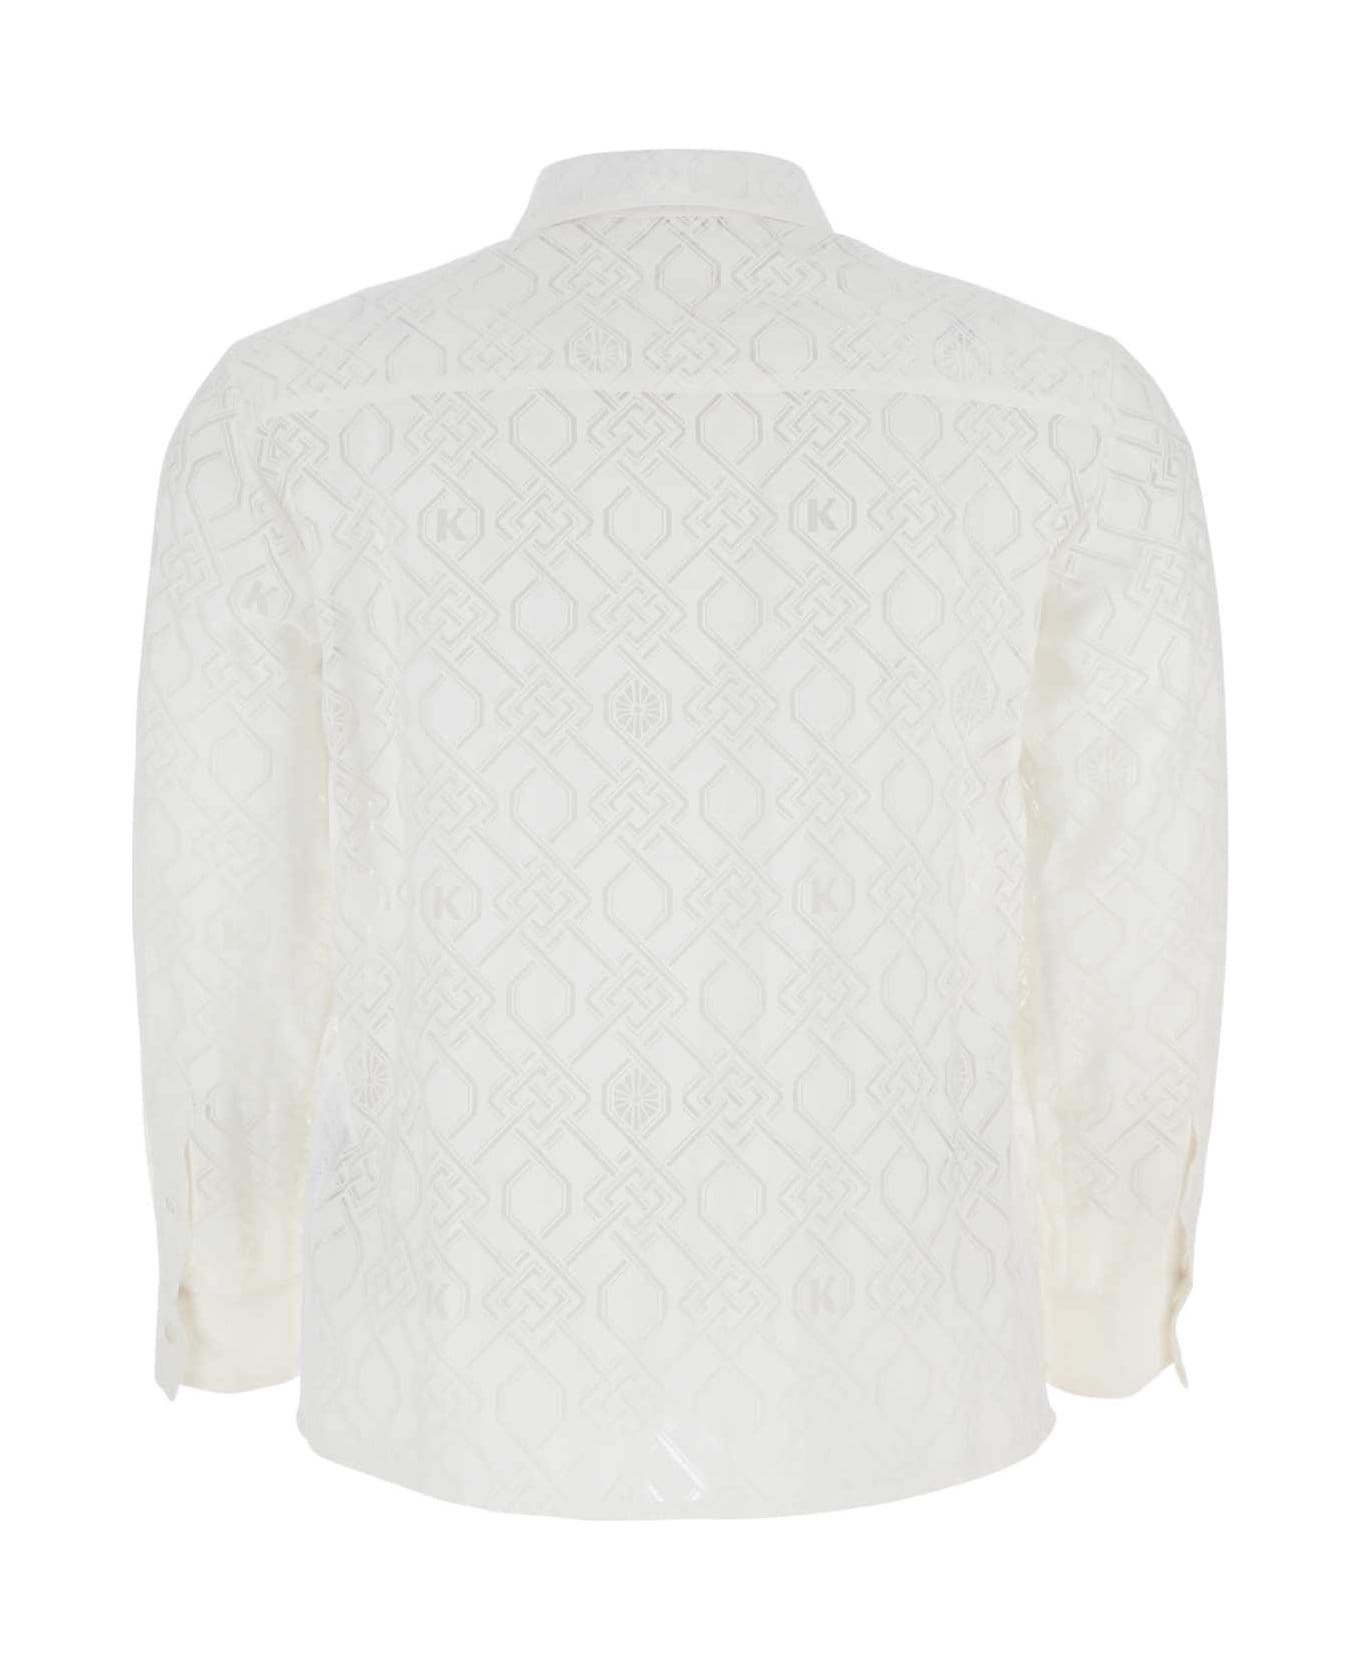 Koché Embroidered Viscose Blend Shirt - White シャツ